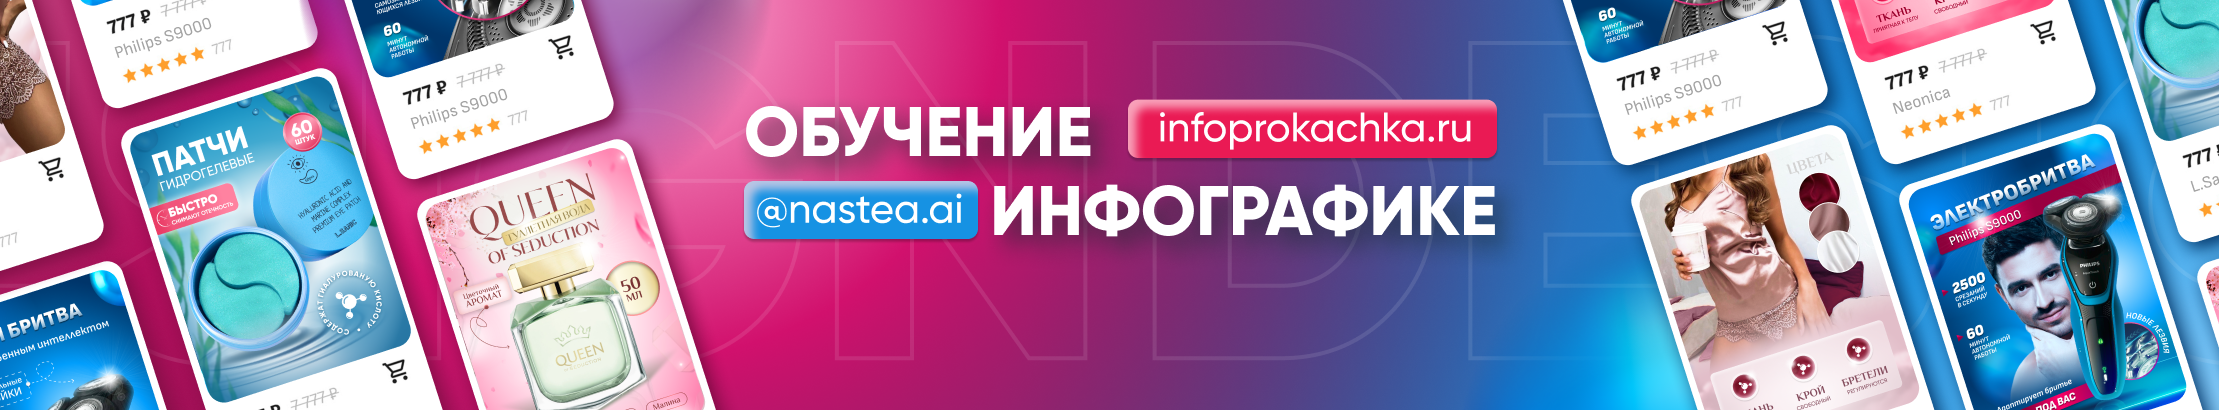 Anastasia Obshatko's profile banner